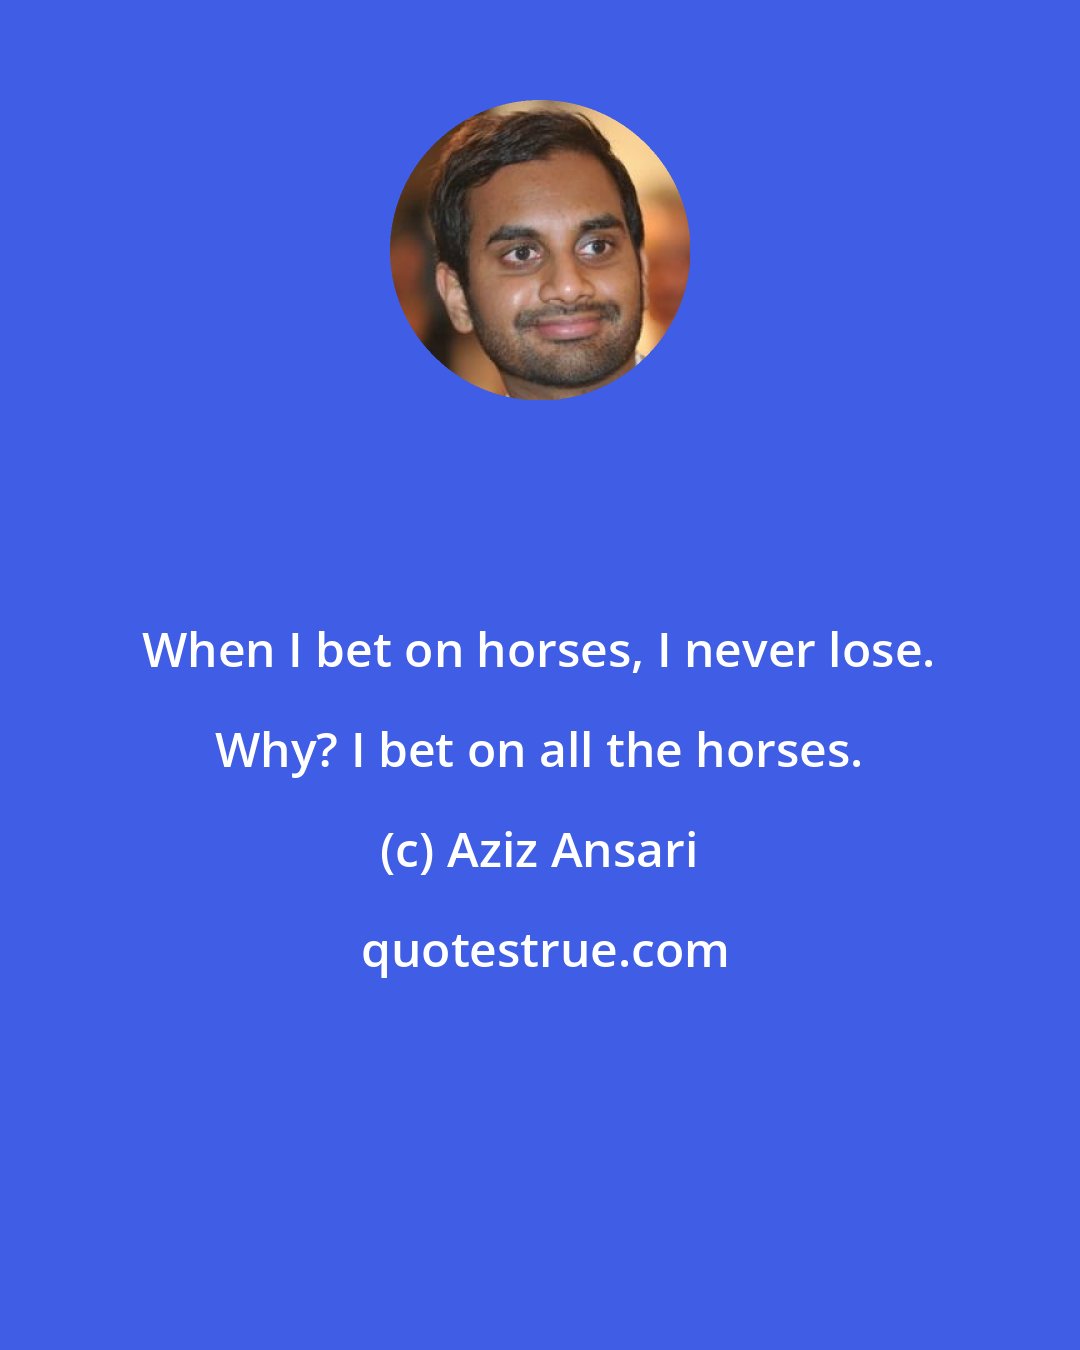 Aziz Ansari: When I bet on horses, I never lose. Why? I bet on all the horses.